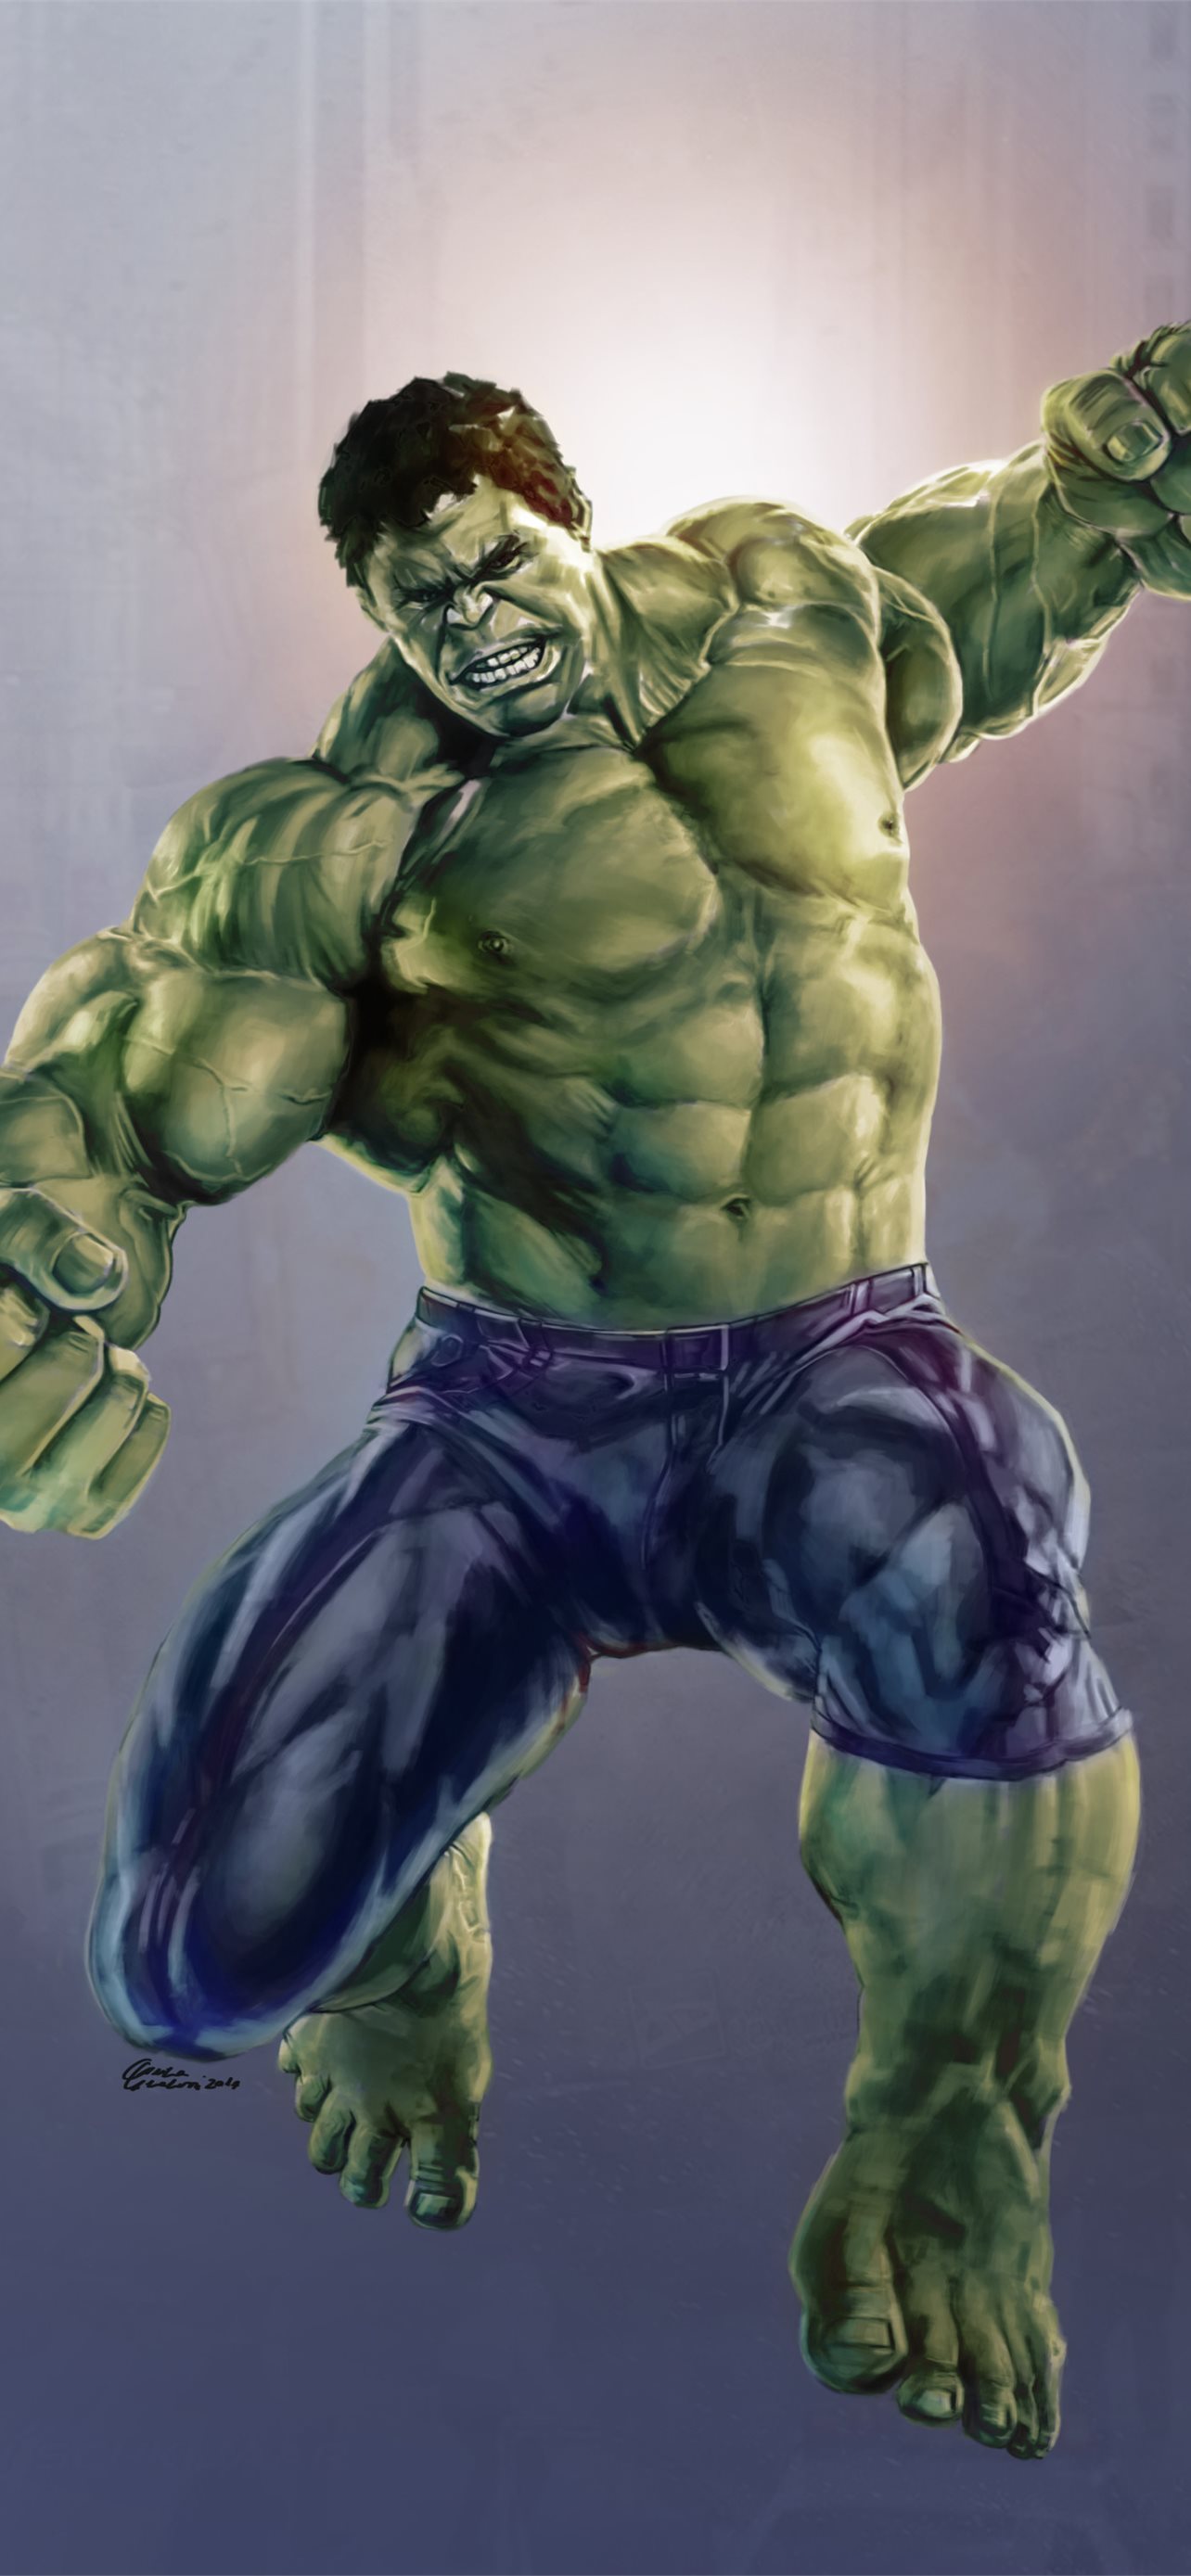 Comics Hulk 4k Ultra HD Wallpaper by BossLogic-thanhphatduhoc.com.vn